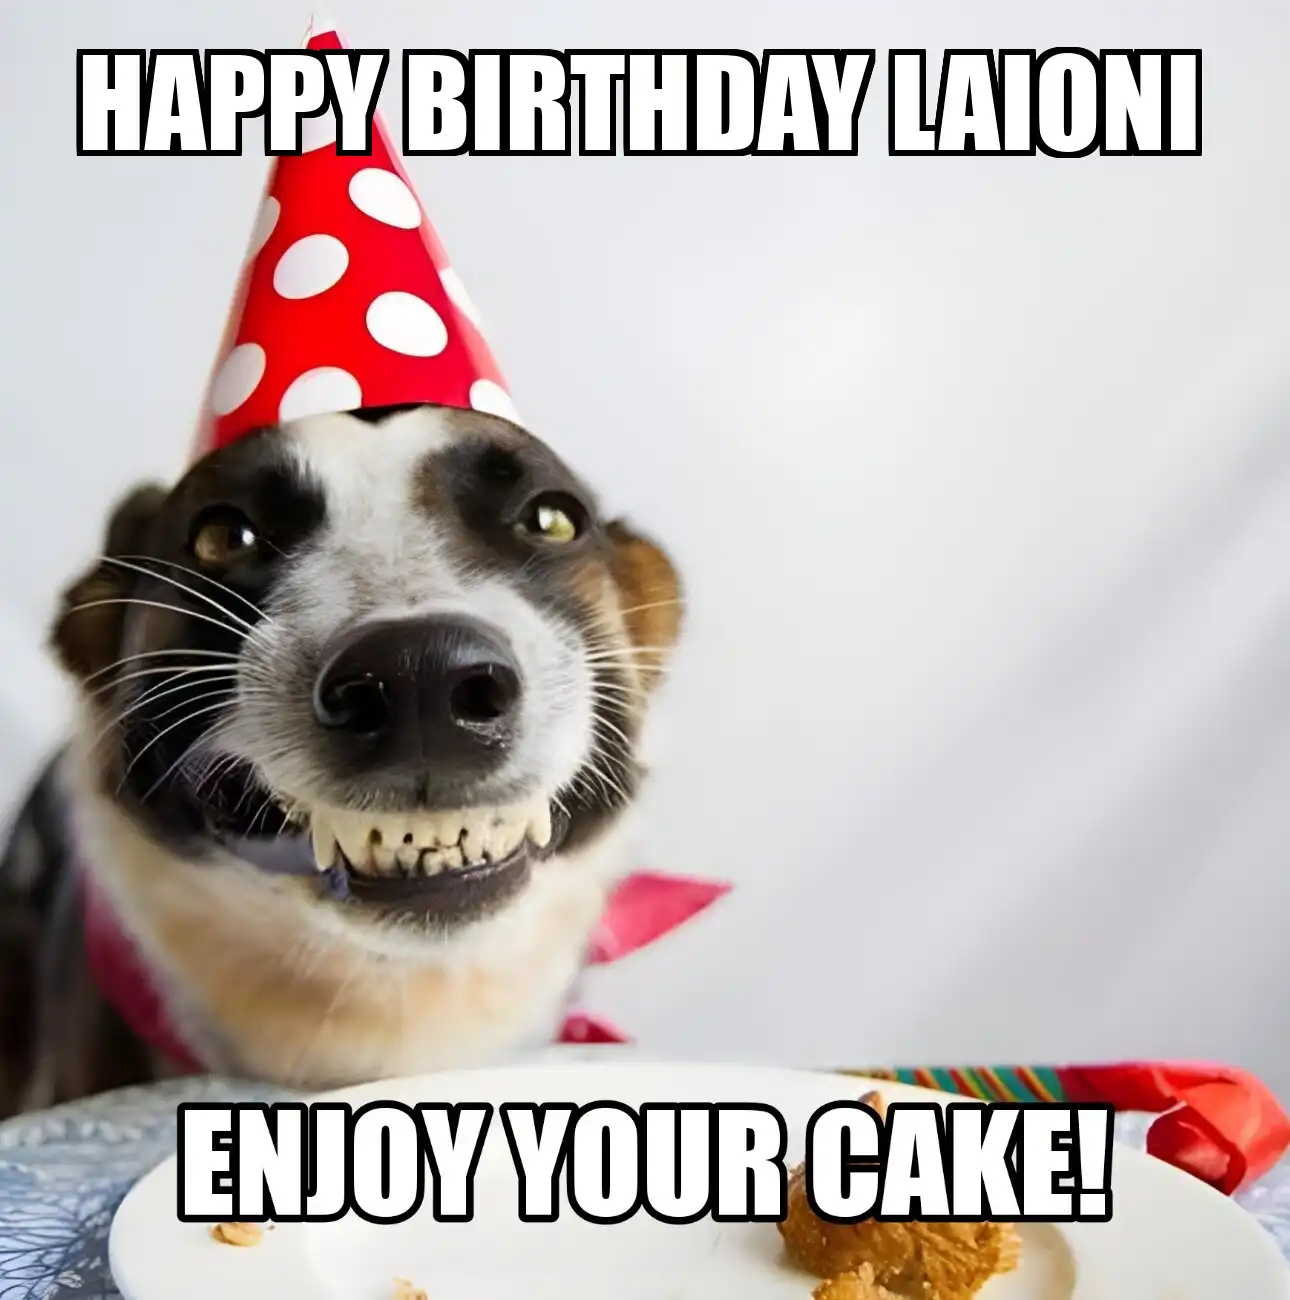 Happy Birthday Laioni Enjoy Your Cake Dog Meme